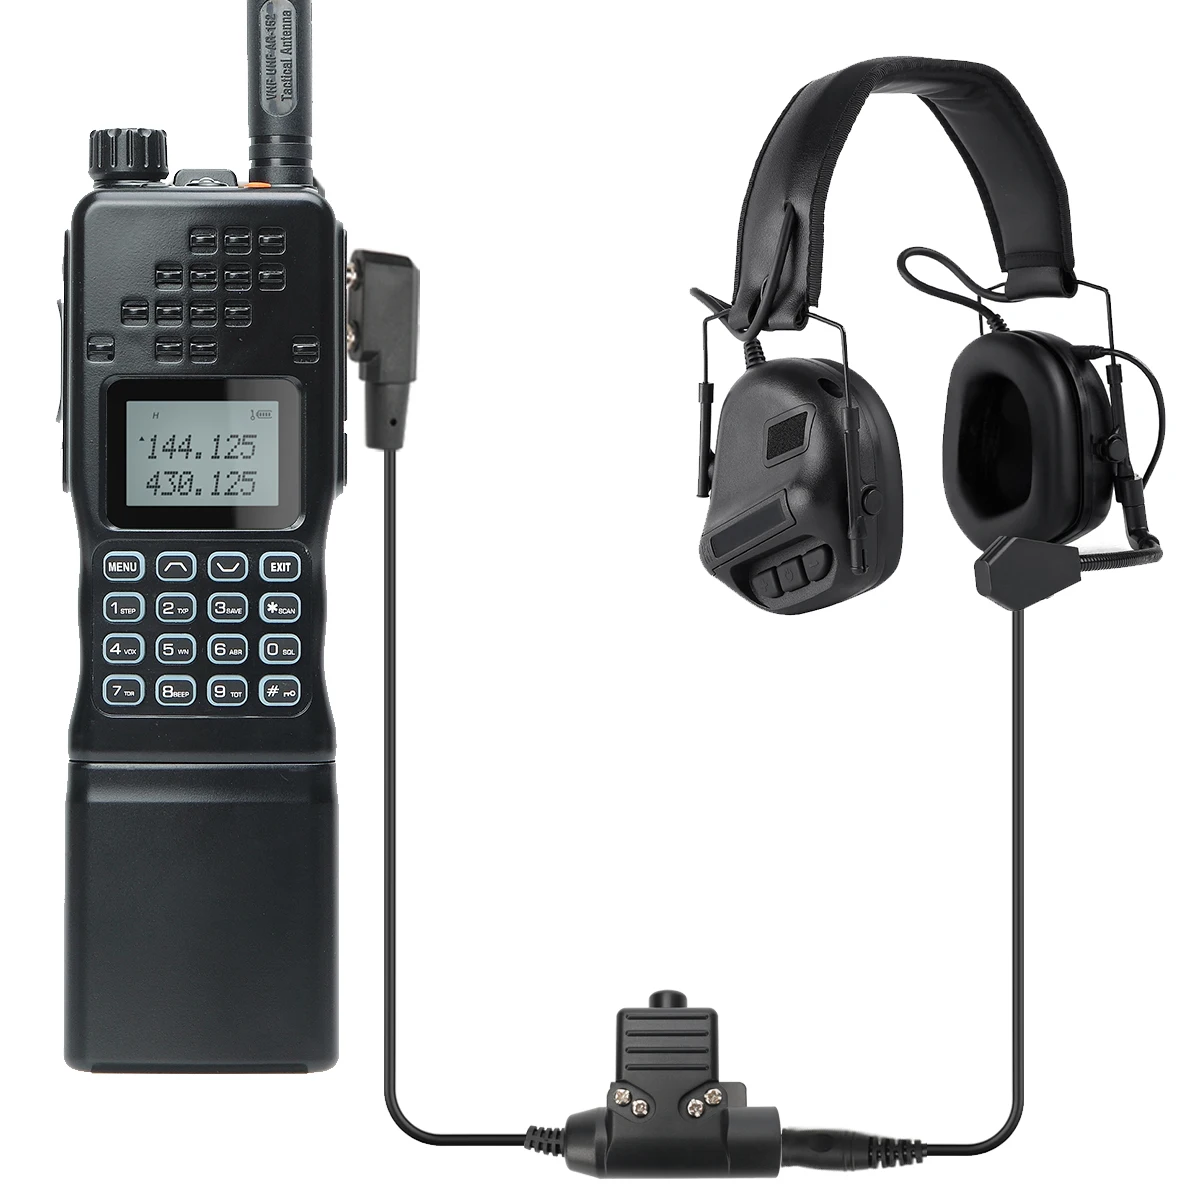 2 way radio Baofeng AR-152 15W Walkie Talkie Tactical Two way Radio with Noise Reduction Sound pickup Headset  Dual Band Radio AN /PRC-152 walkie talkie